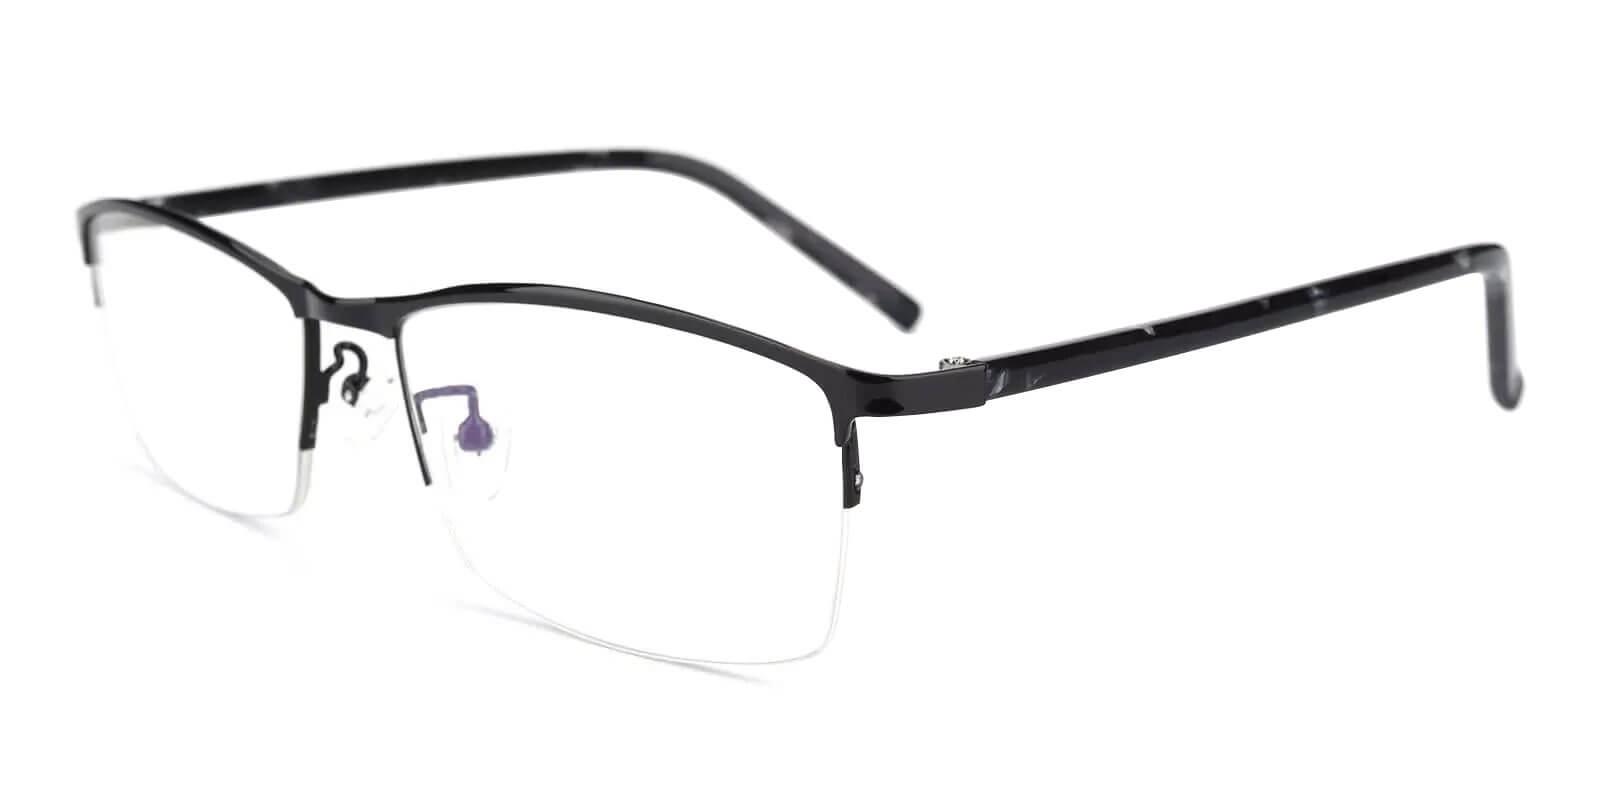 William Black Metal Eyeglasses , NosePads Frames from ABBE Glasses